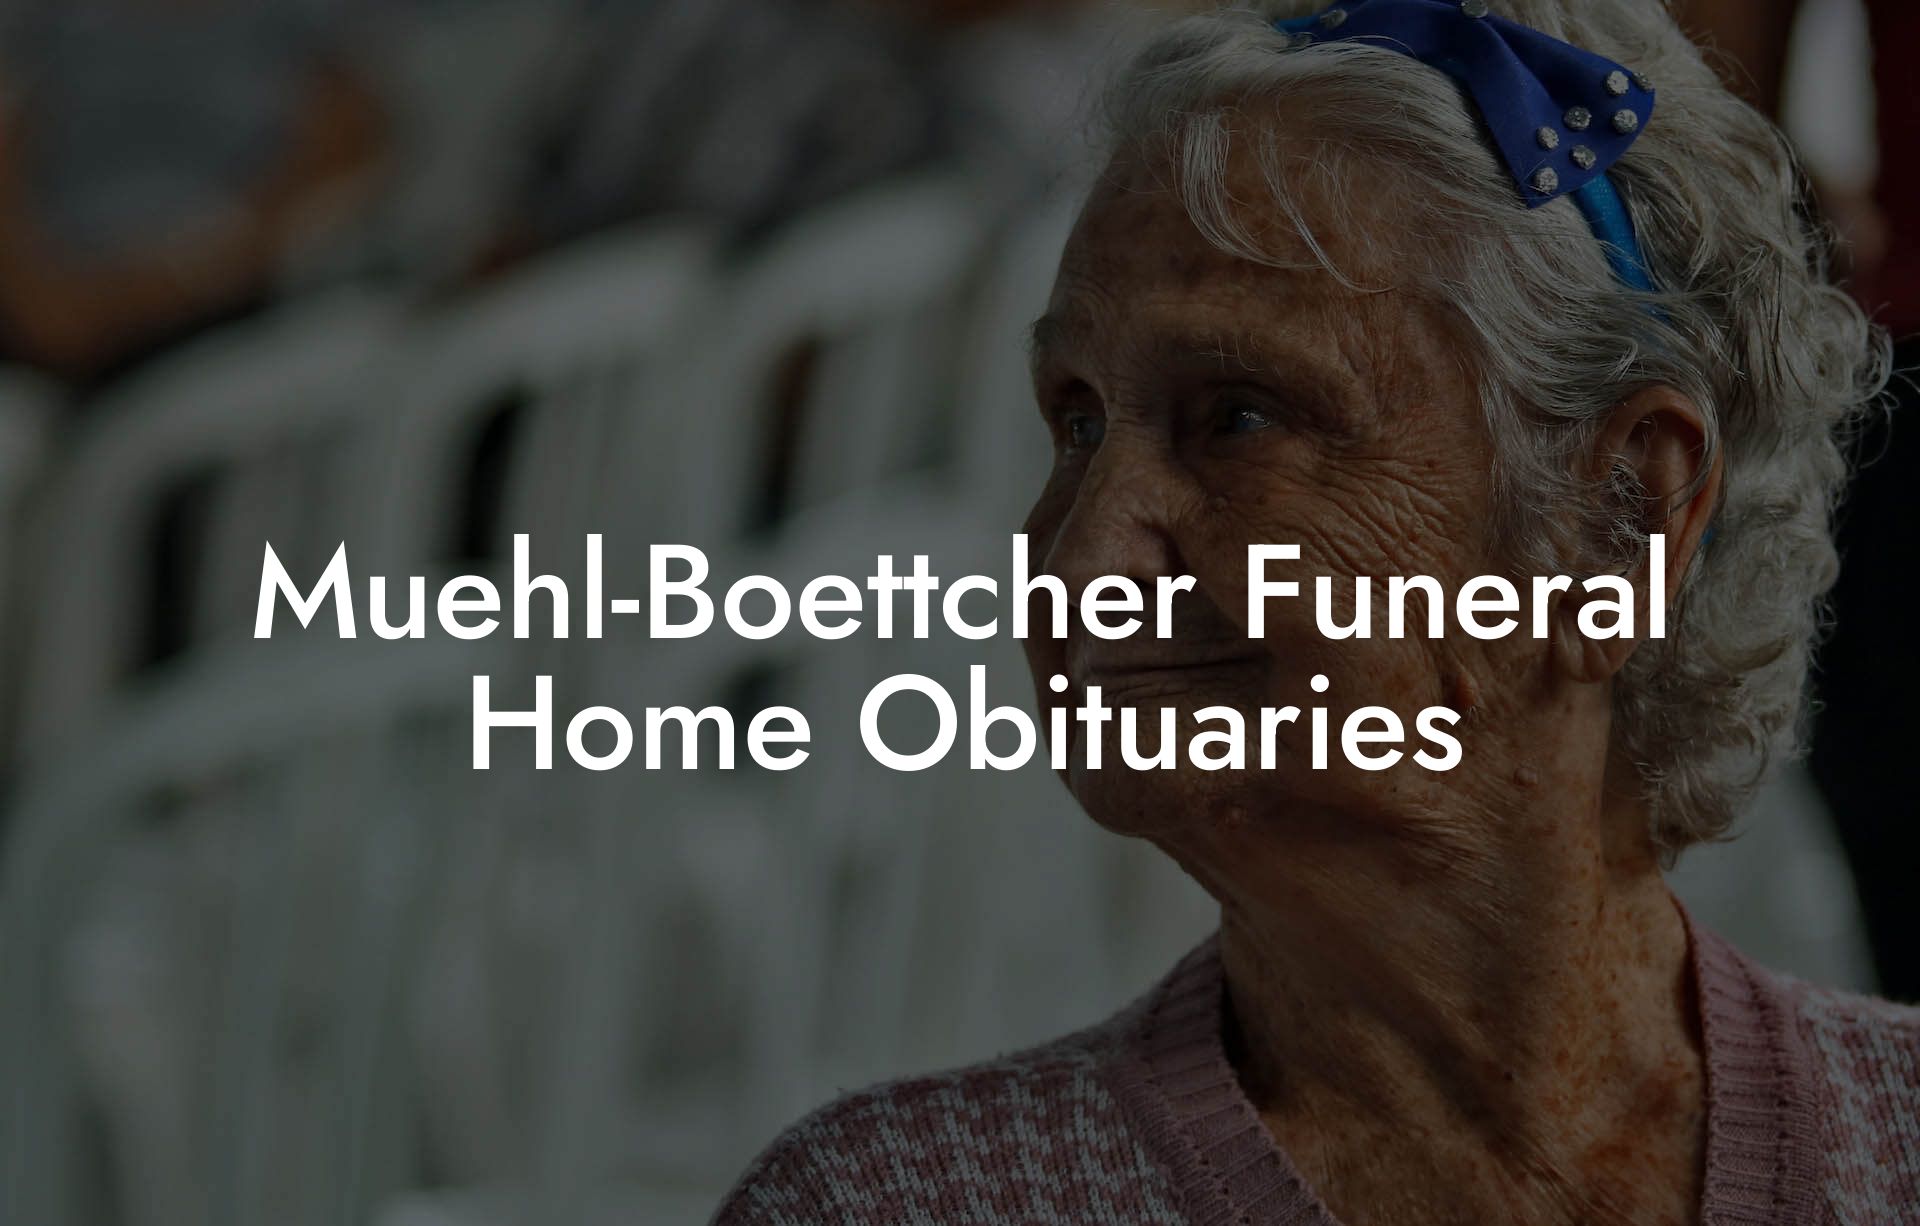 Muehl-Boettcher Funeral Home Obituaries